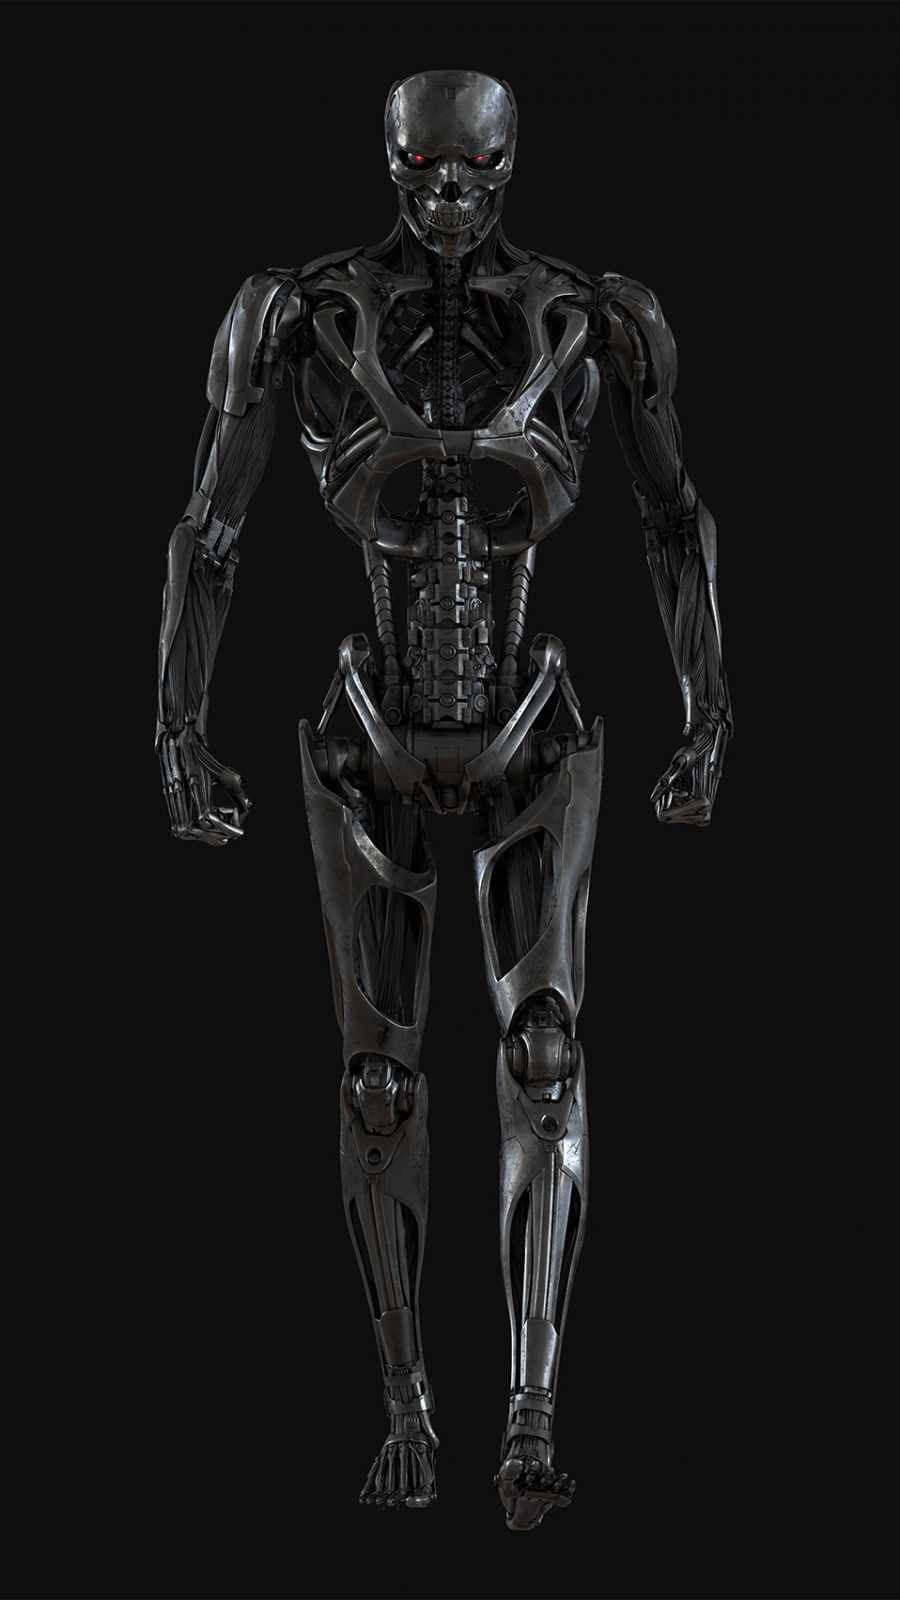 Terminator Robot iPhone Wallpaper